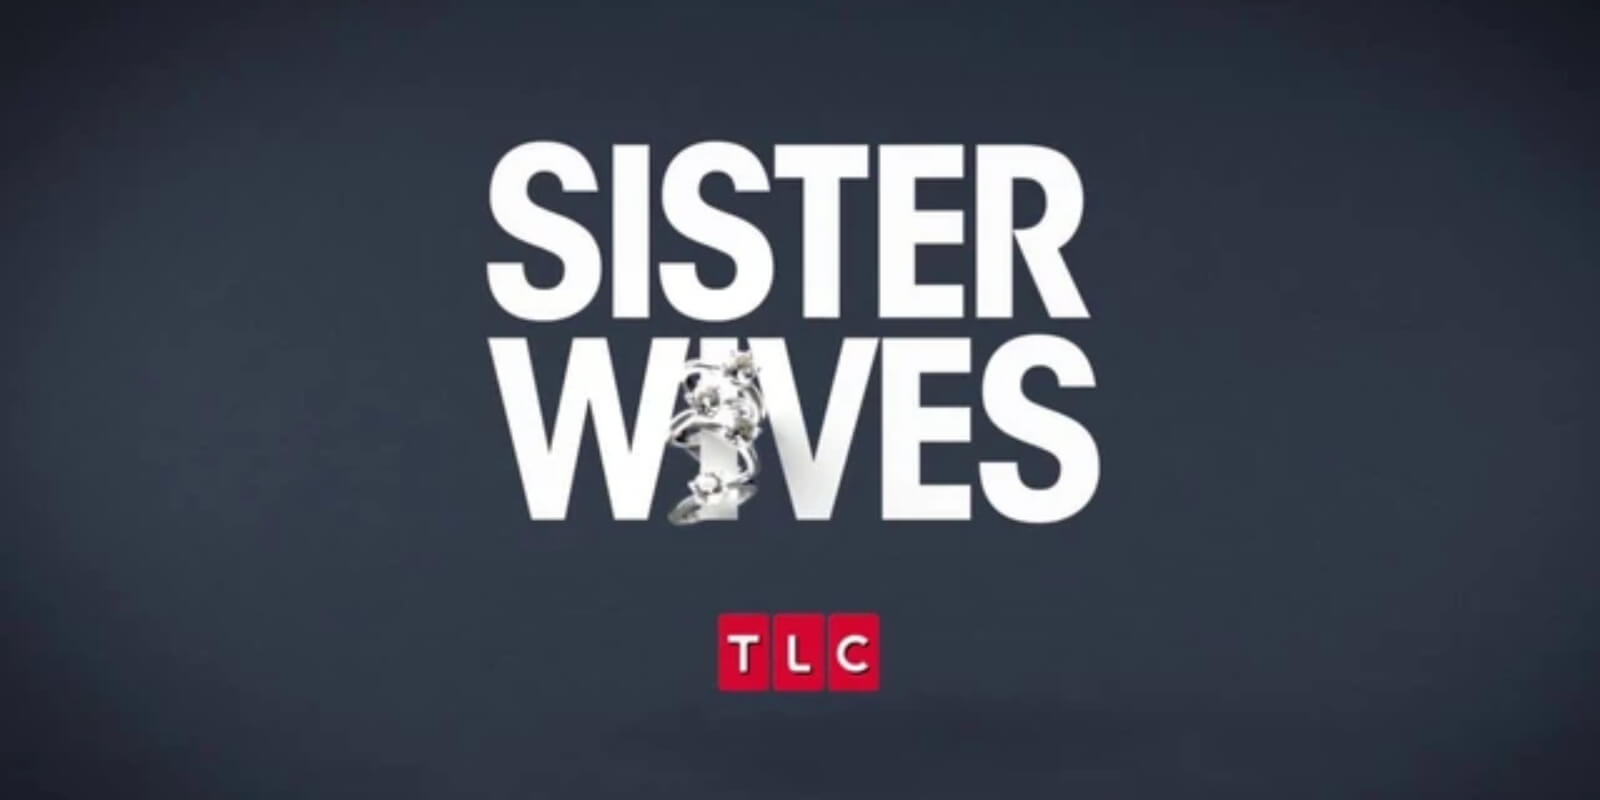 Season 17 'Sister Wives' logon for TLC.